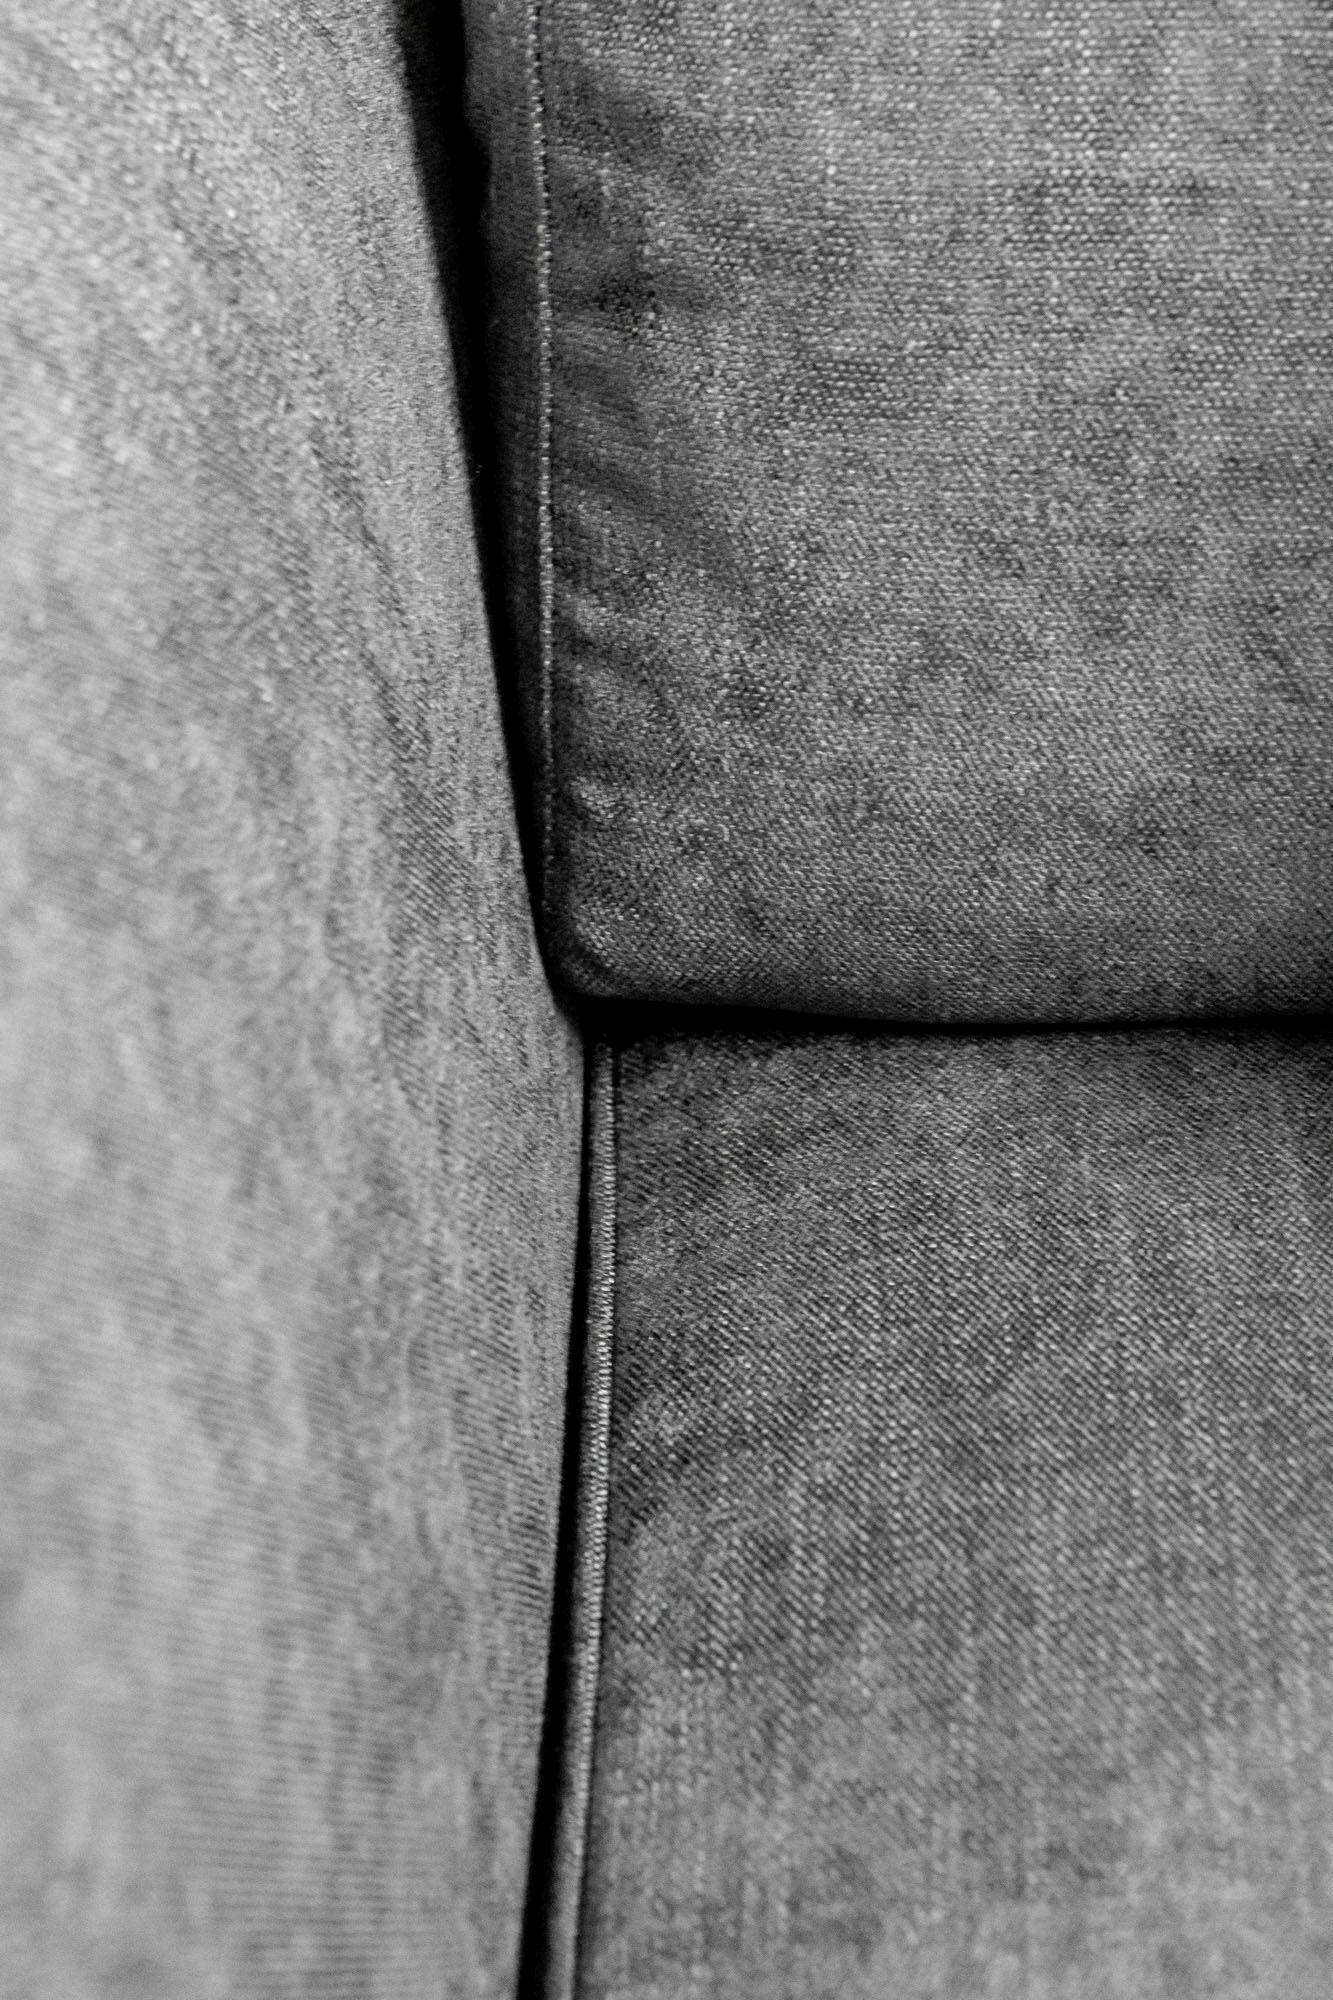 frigerio-sofa-davis-220-stoff-pastello-11-grigio-cat-super-grau-gestell-metall-schwarz-verchromt-mf-4